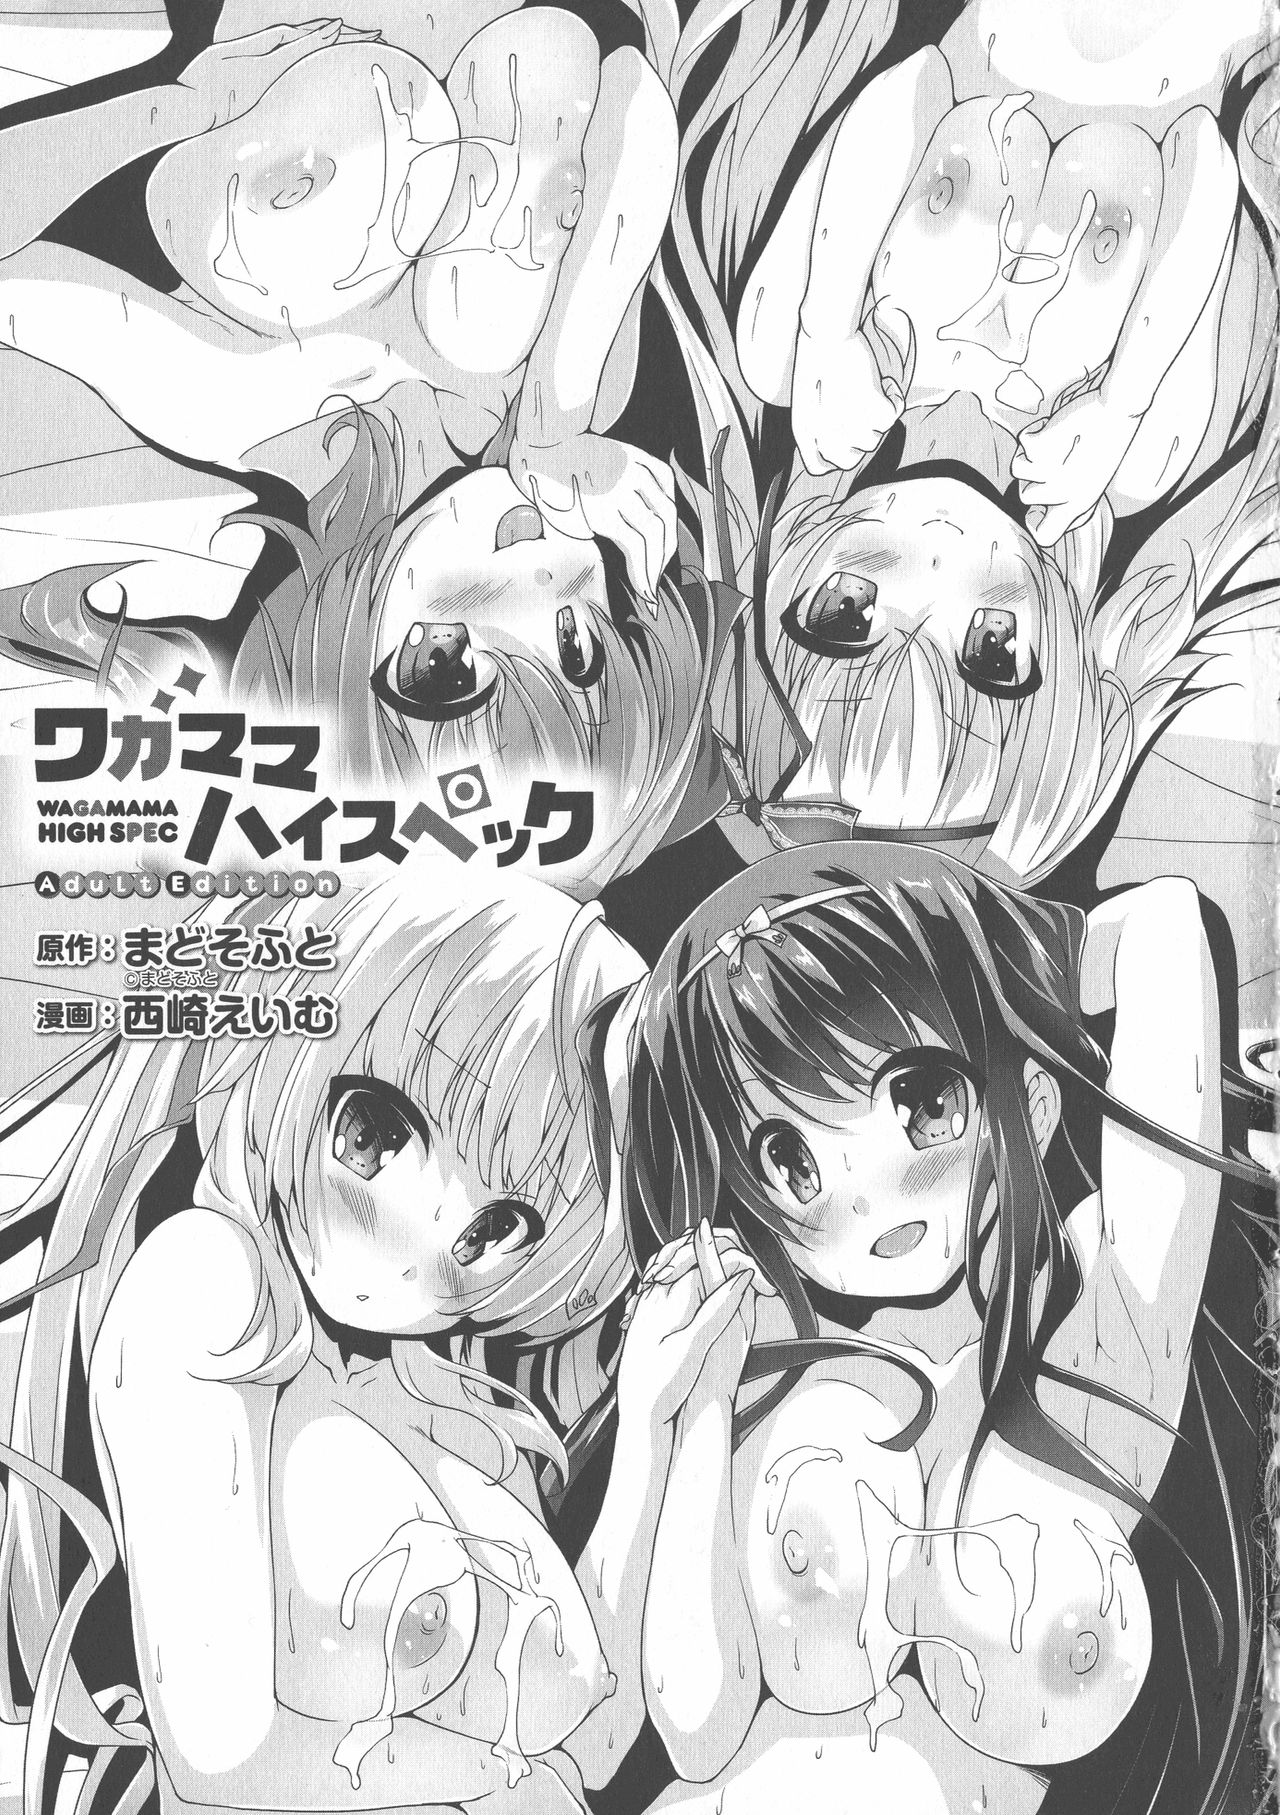 [Nishizaki Eimu, Mado Soft] Wagamama High Spec Adult Edition [西崎 えいむ, まどそふと] ワガママハイスペック Adult Edition